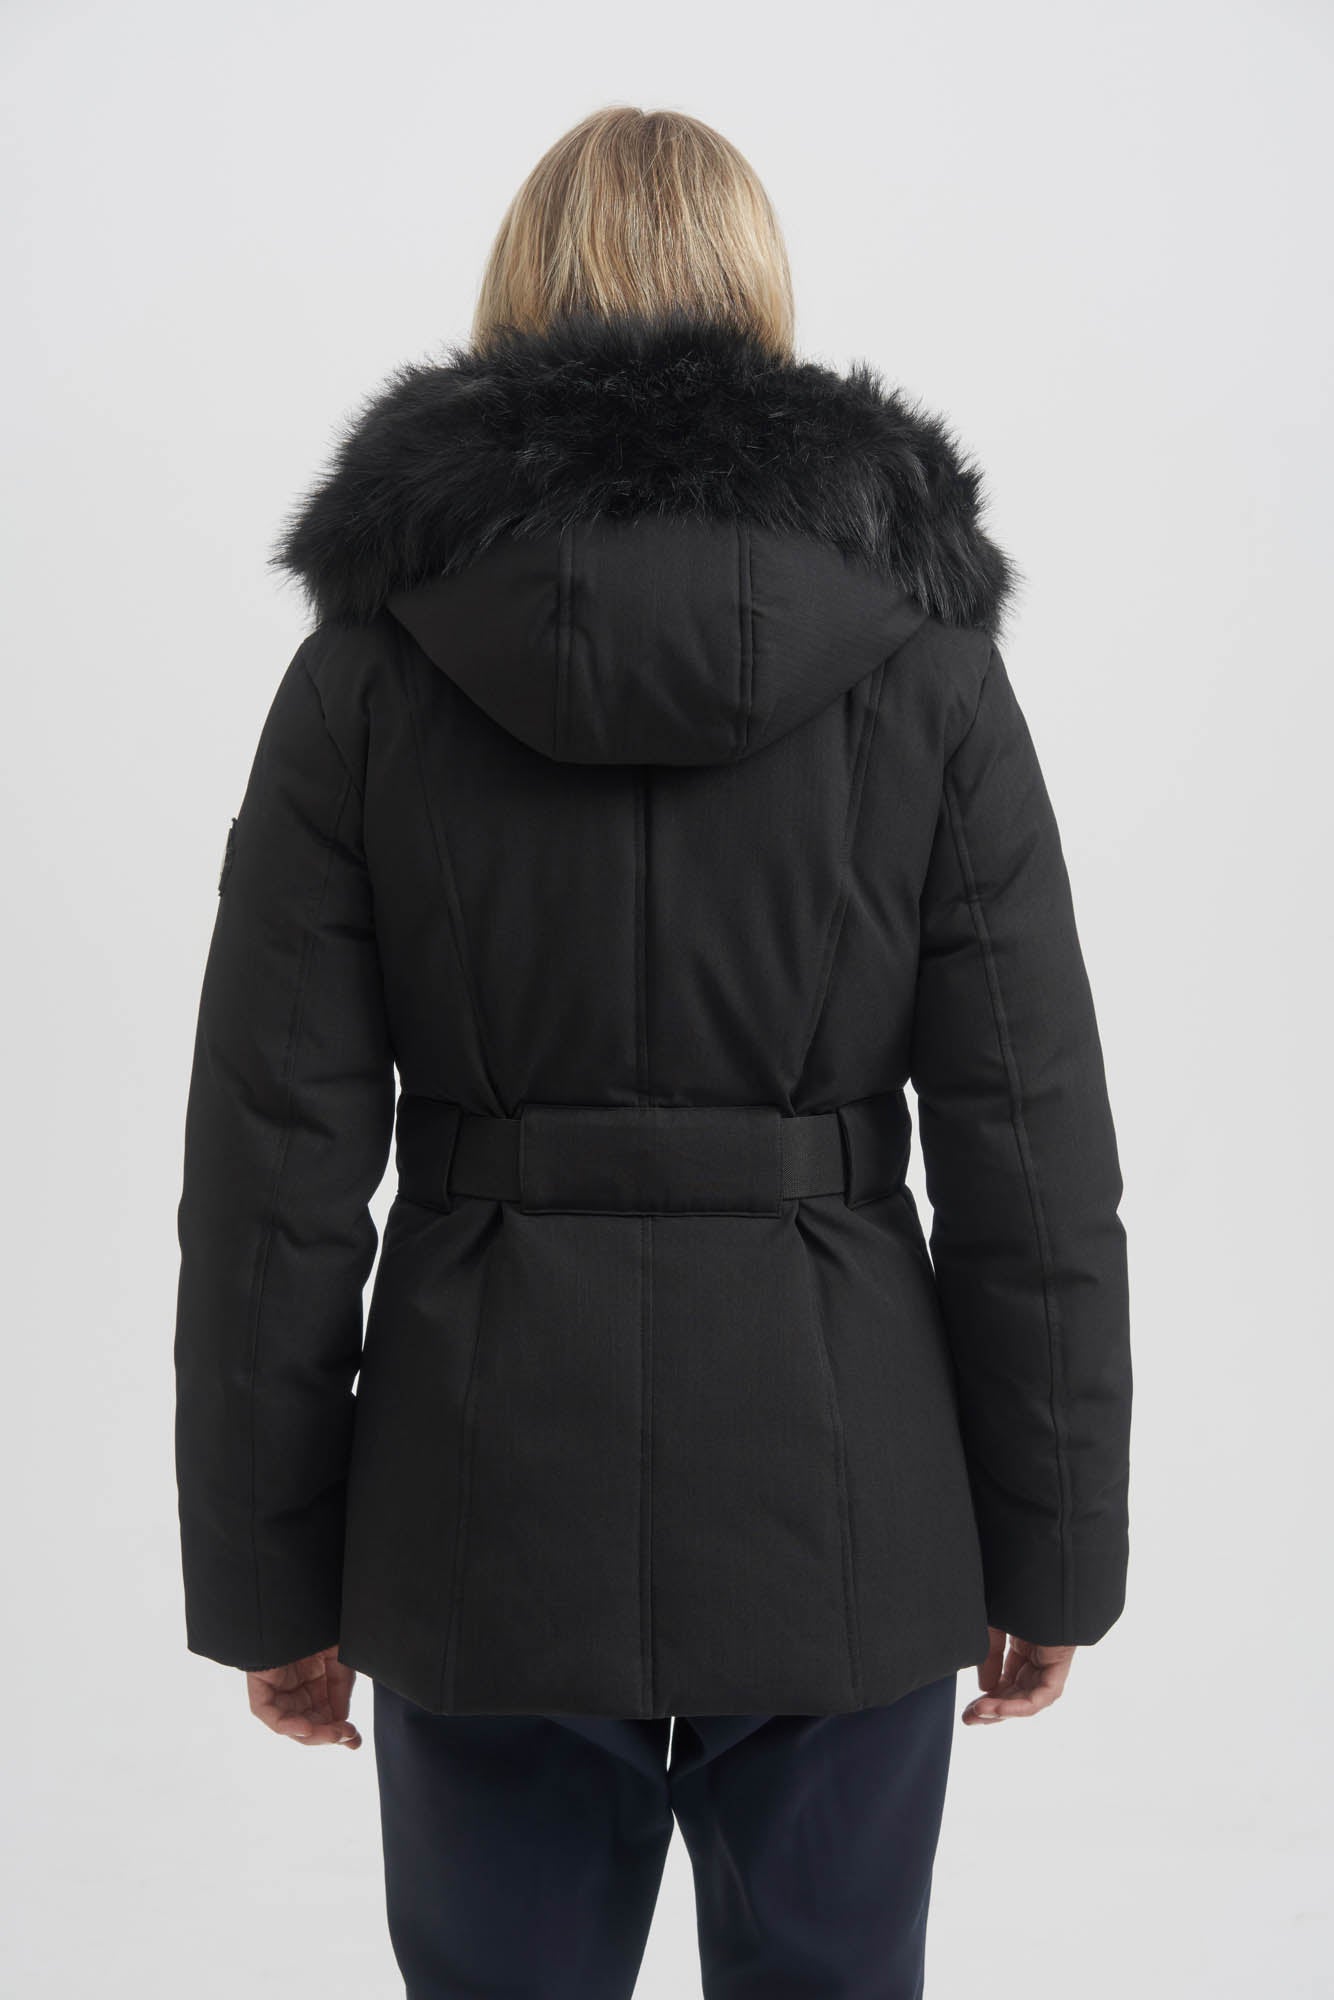 DKNY Black Down Winter Puffer Coat Jacket Parka Faux Fur Hooded Women  MEDIUM Ski